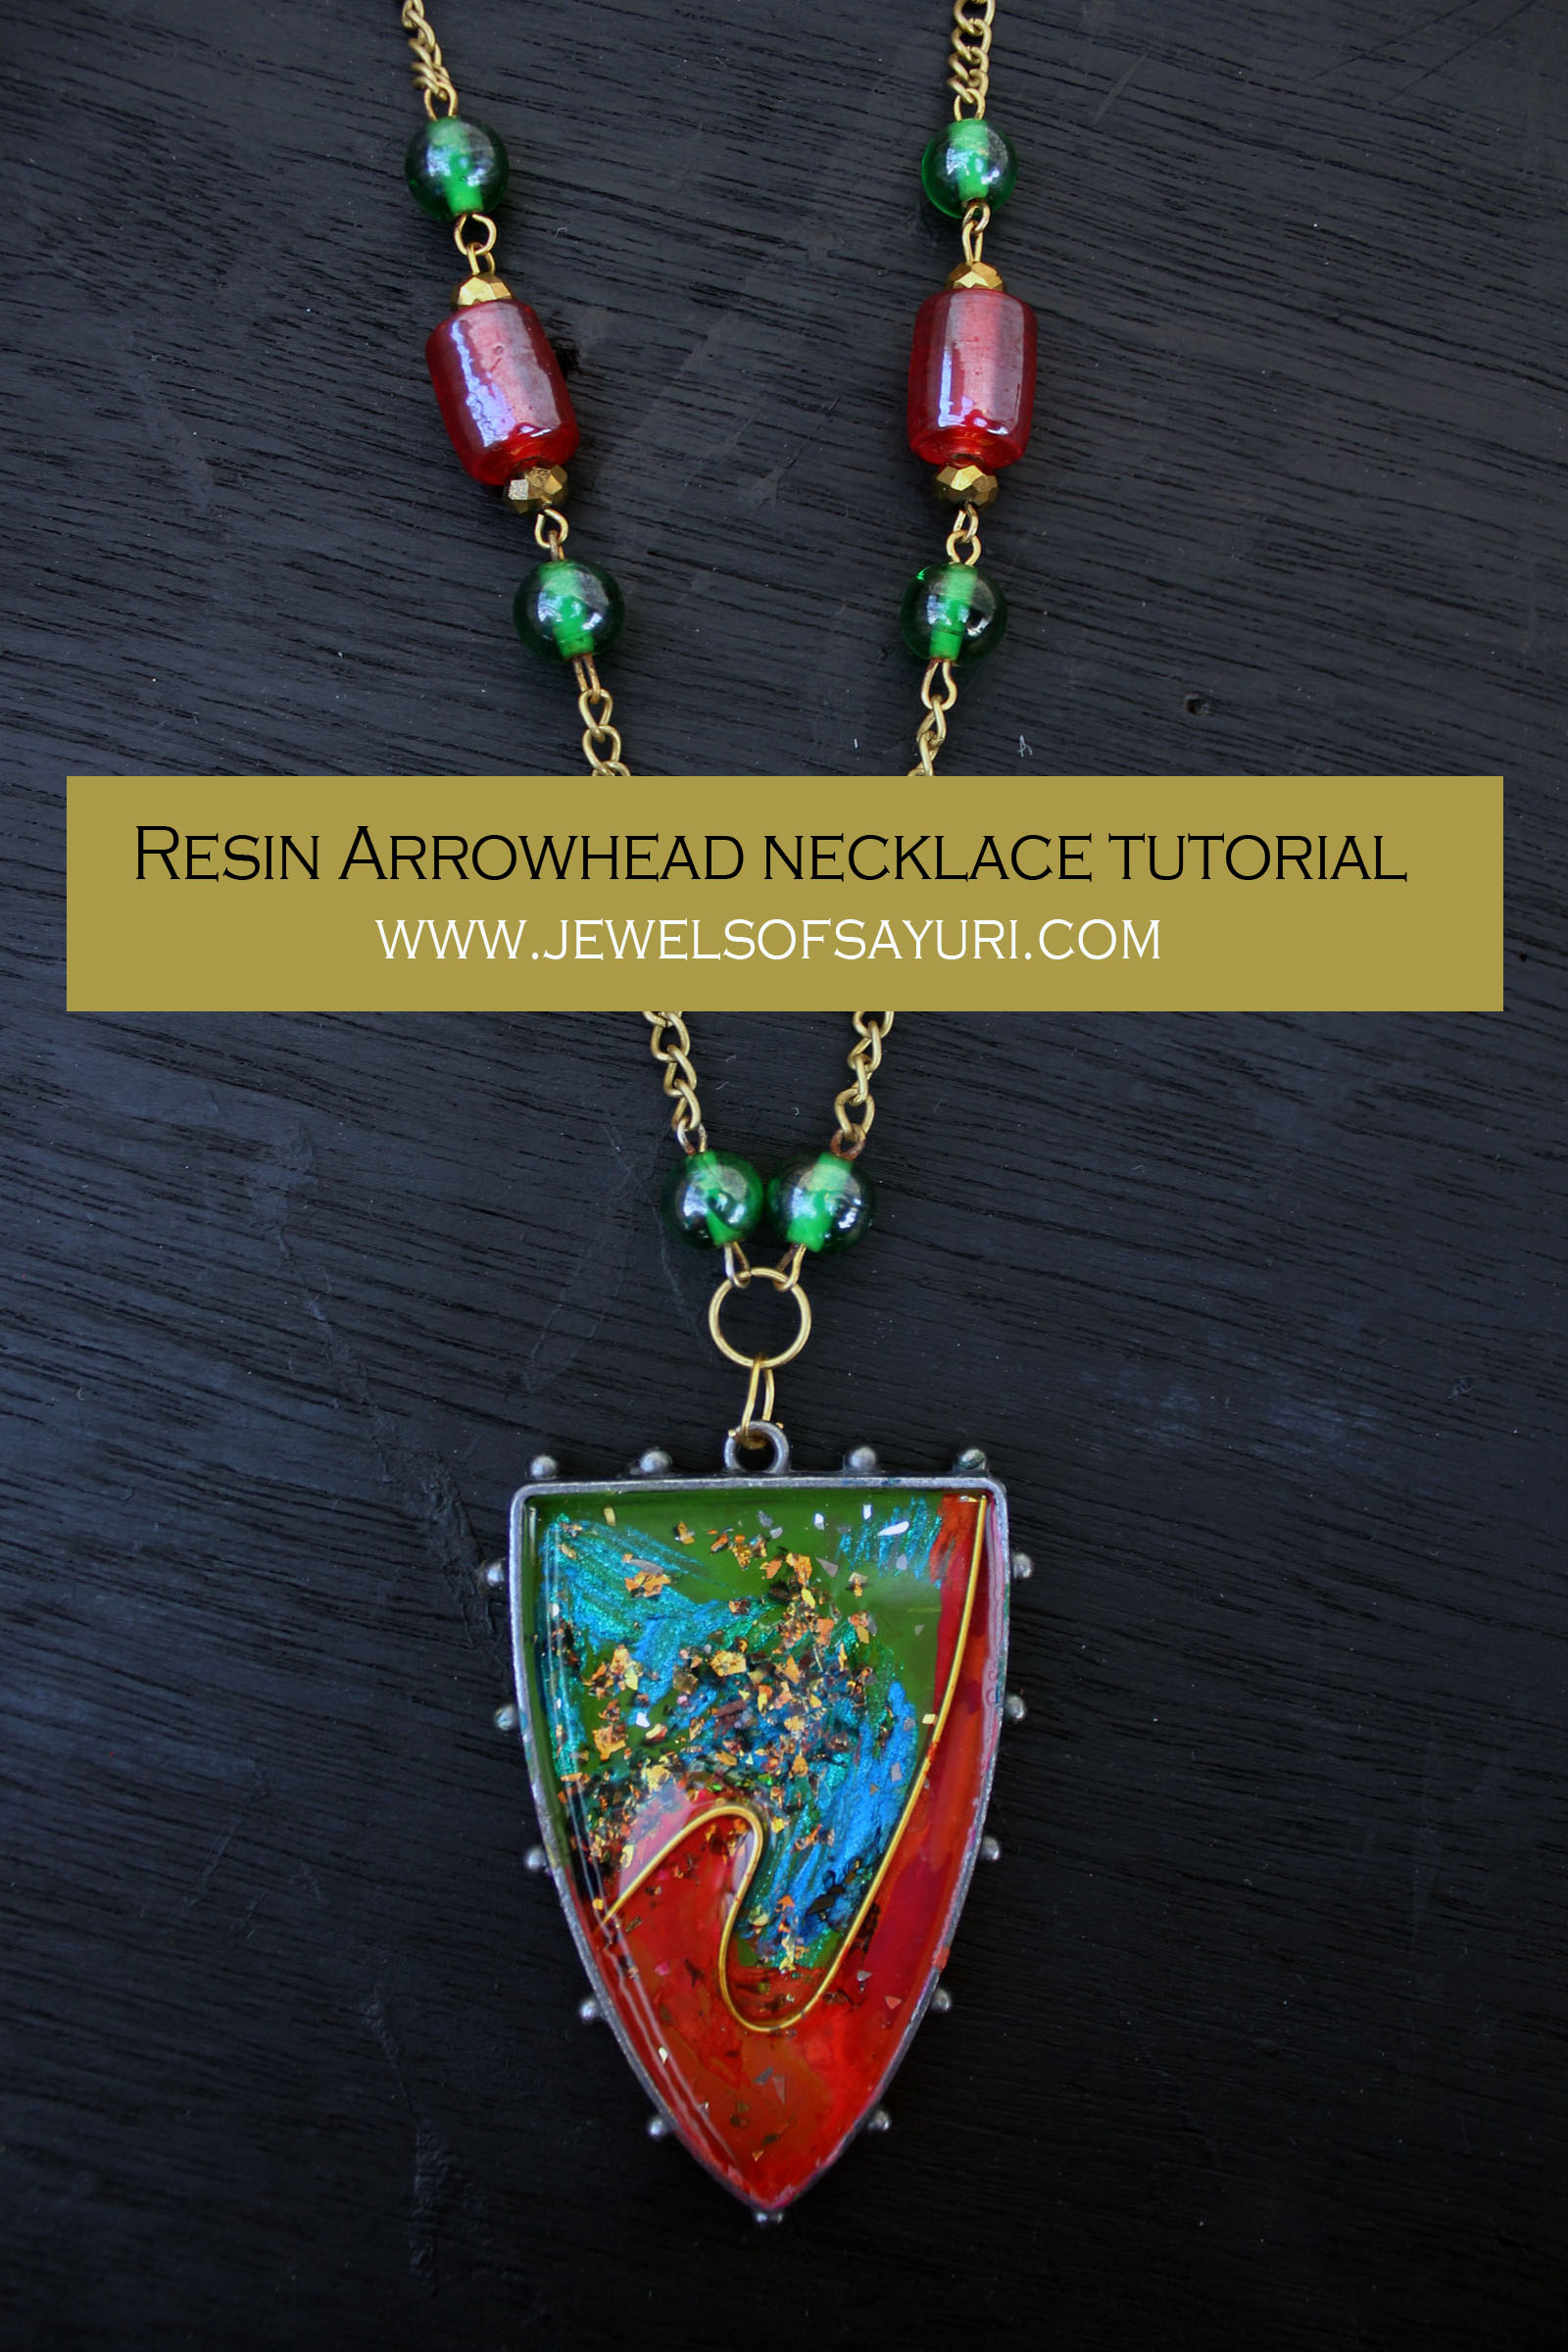 Resin Arrowhead necklace tutorial